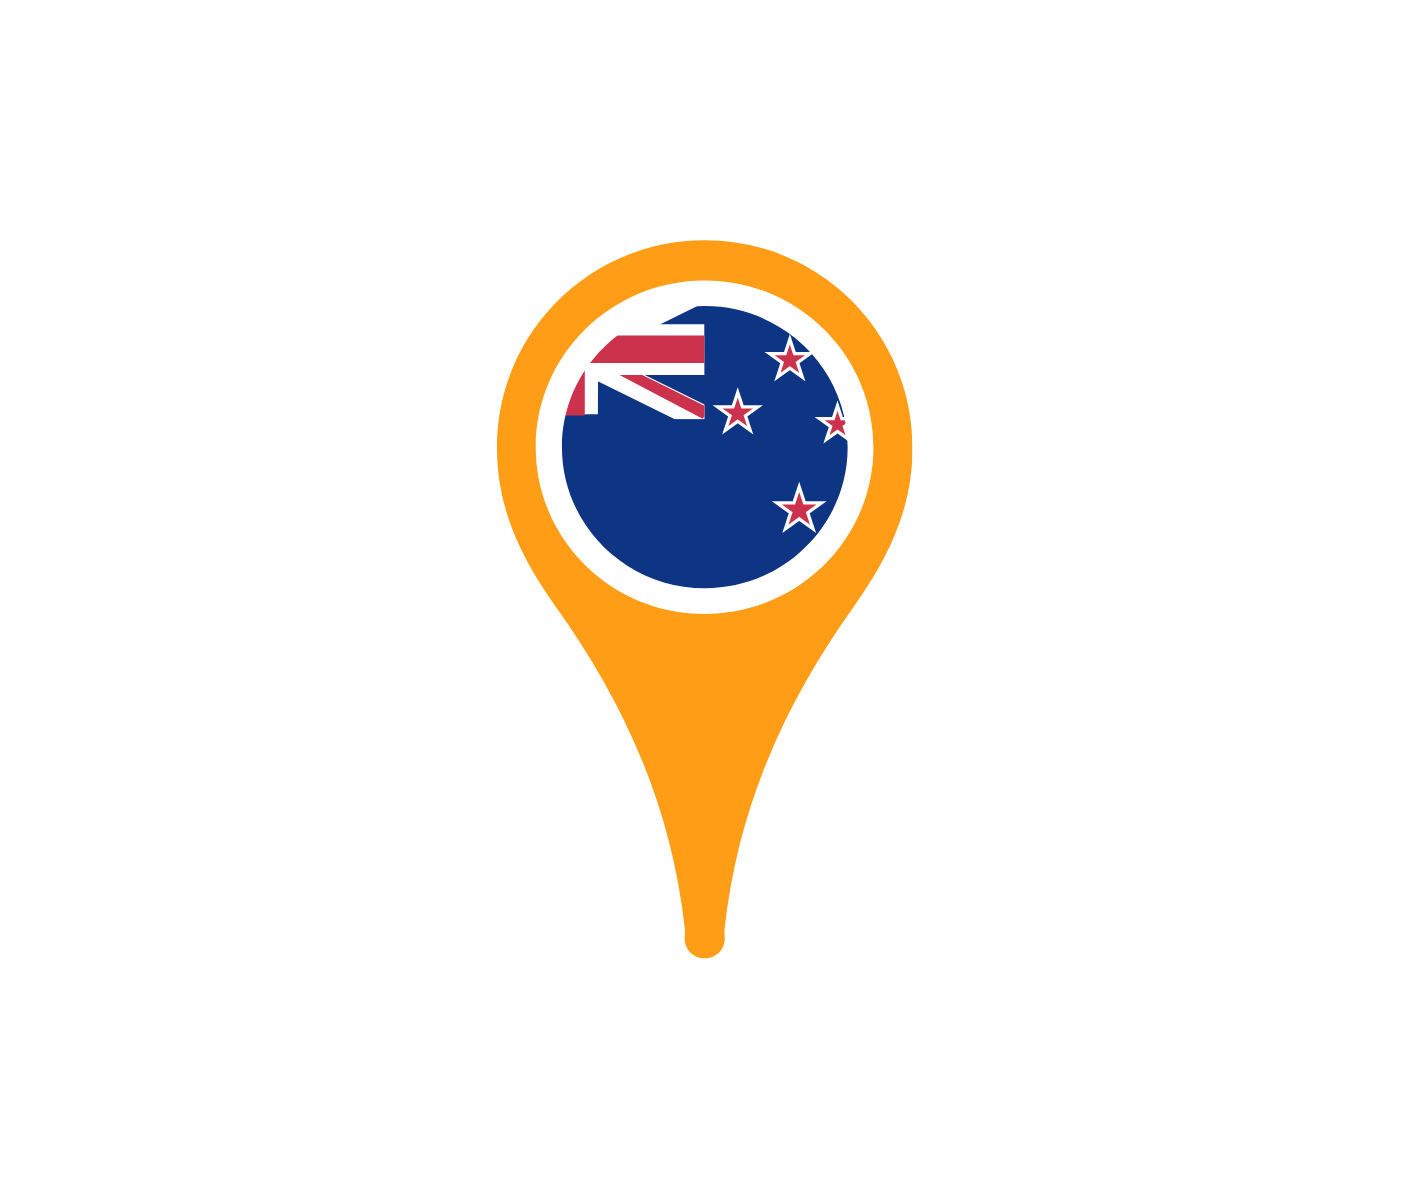 New Zealand marker icon